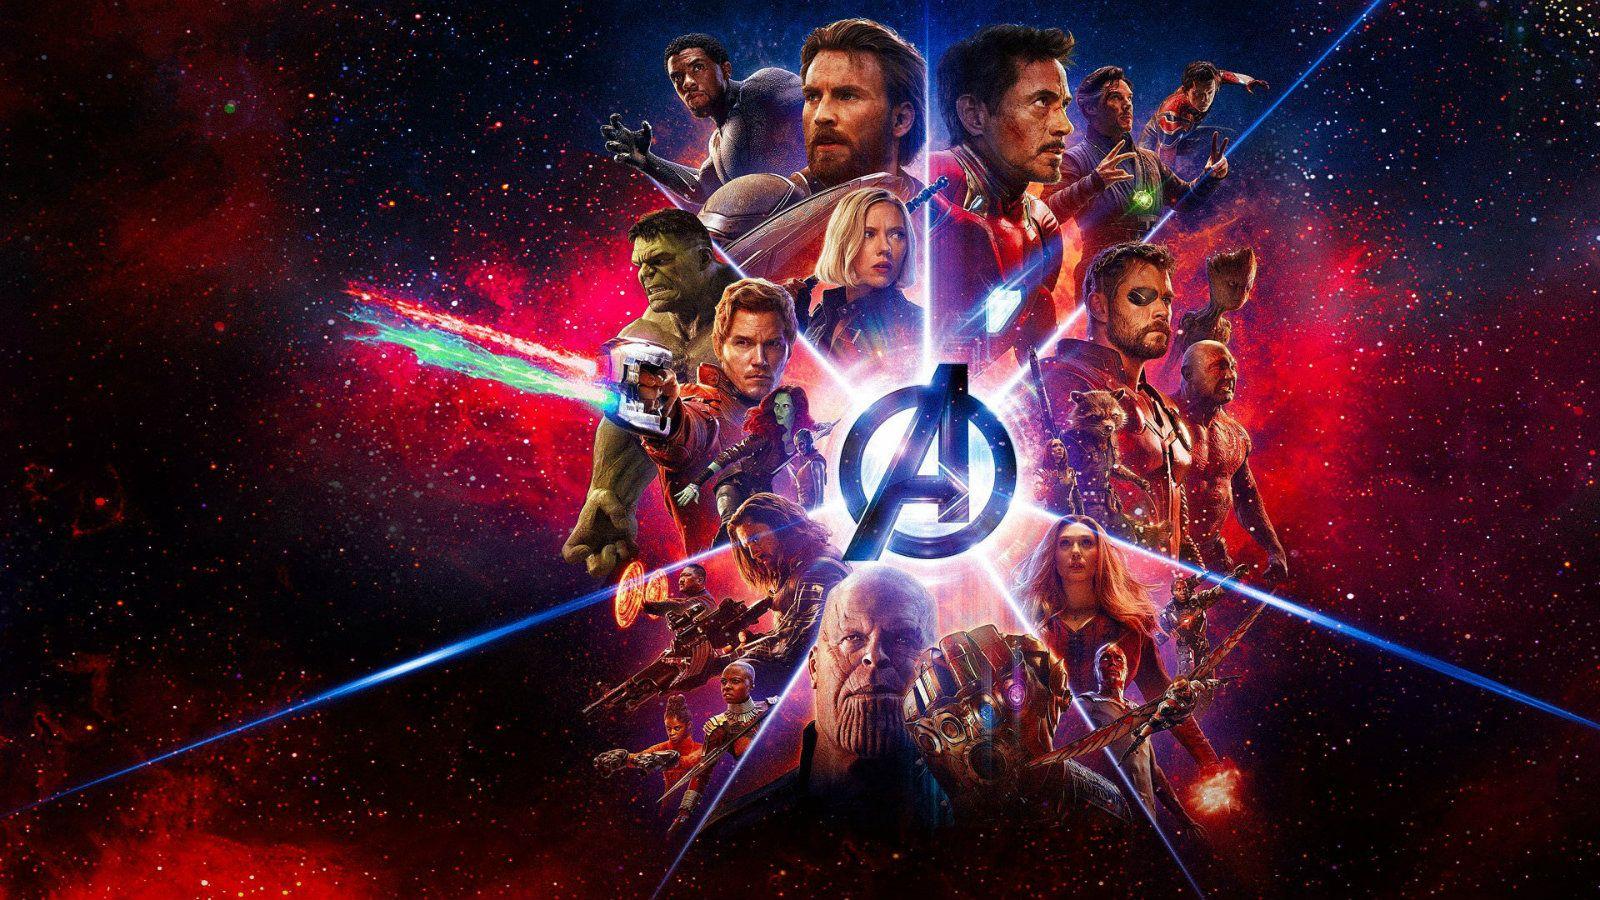 Avengers: Infinity War: Infinity War 1 & 2 wallpaper